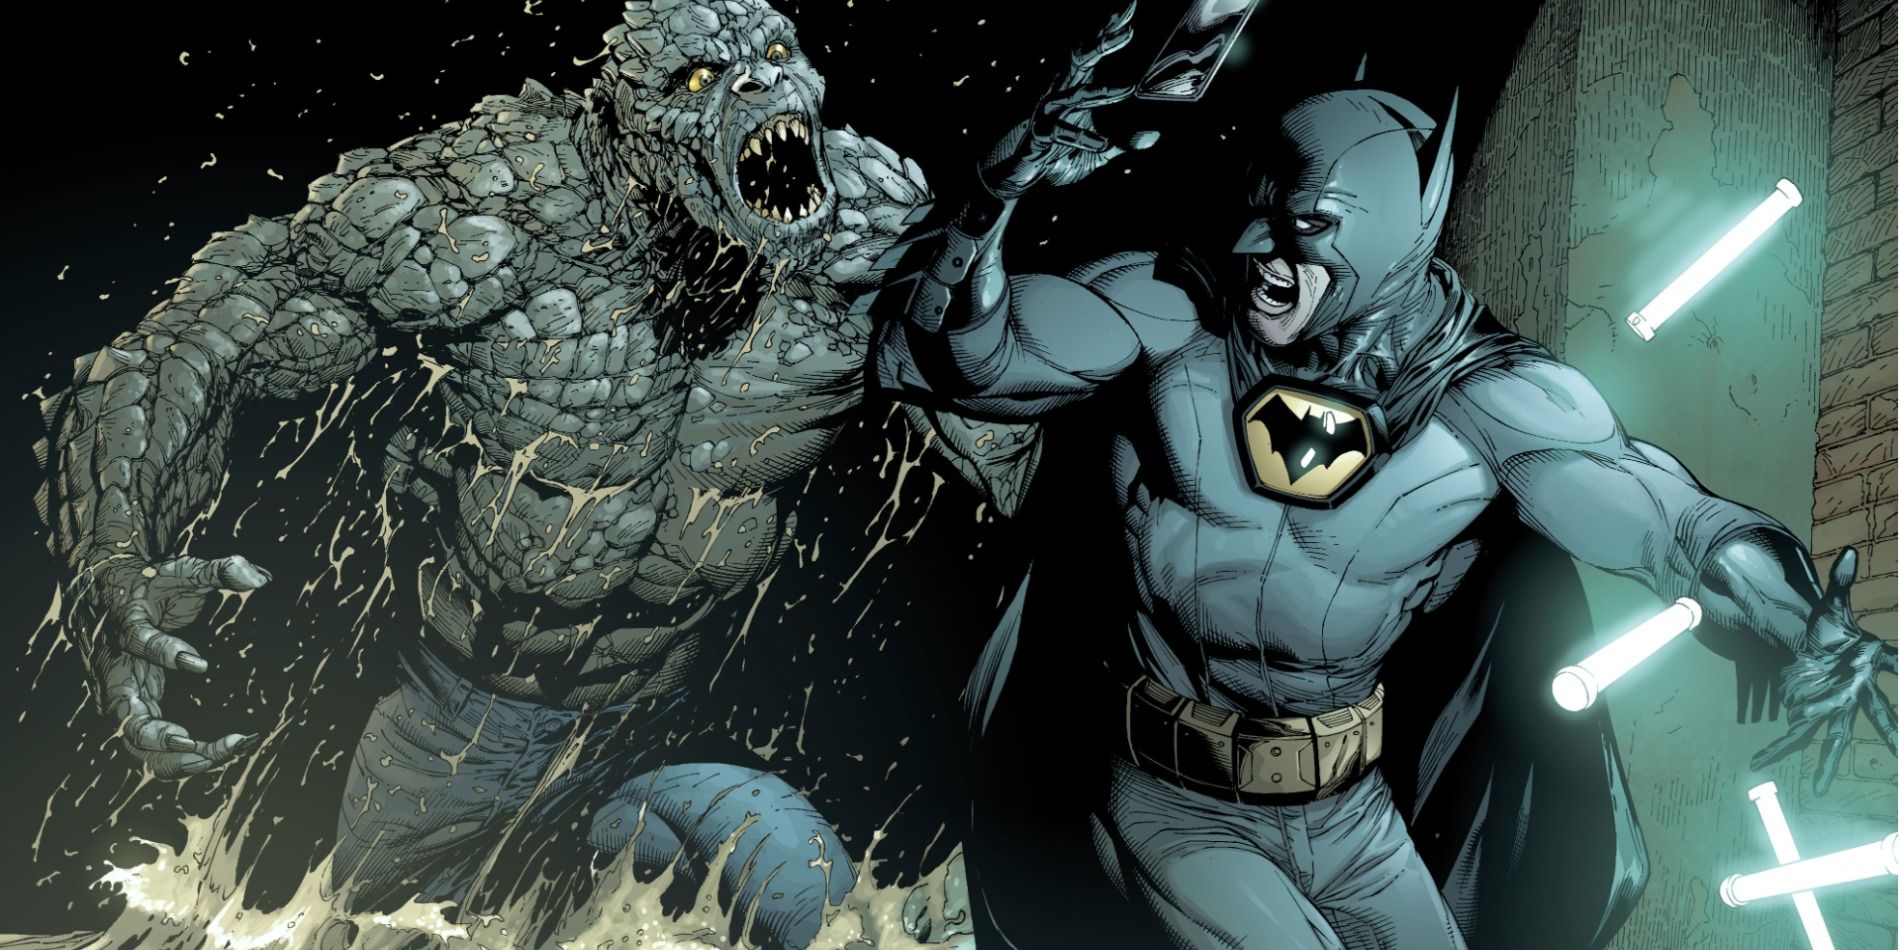 Batman getting jumped by Killer Croc in Earth One Vol. 2